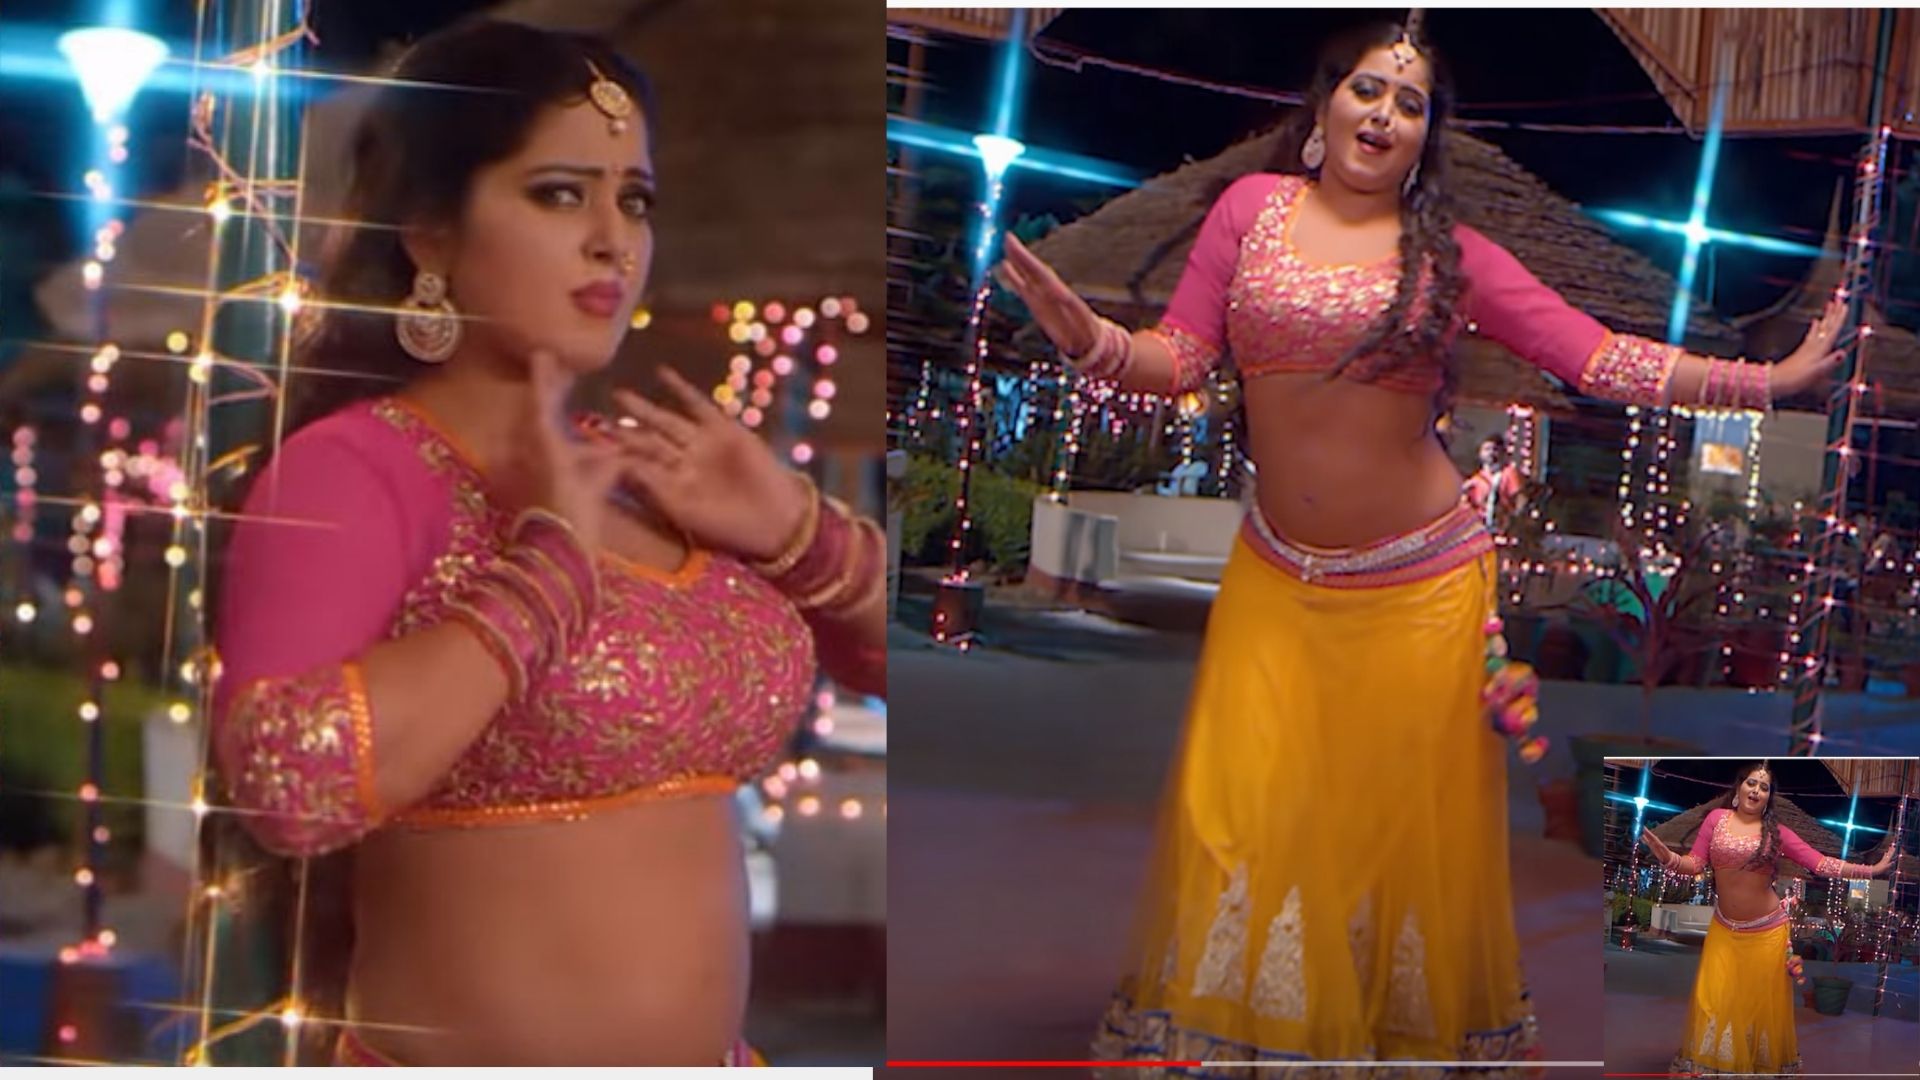 bhojpuri film most popular song videos 2021, Bhojpuri Sexy Video , Bhojpuri Sexy Video, Bhojpuri song, Antra Singh Superhit Bhojpuri Song, bhojpuri film most popular song videos 2021, भोजपुरी विडियो, भोजपुरी गाना, Superhit Bhojpuri Song, Bhojpuri songs, Bhojpuri actress Anjana singh, sexy rain dance, Anjana Singh, bhojpuri gaane 2021 , bhojpuri video song , bhojpuri superhit dance video songs 2021, bhojpuri hot cake, anjana singh dance video song , Raja Ji Chal Gayele Sata Mein, bhojpuri gana, amarpali ka gana,item songs,amrapali item song video,